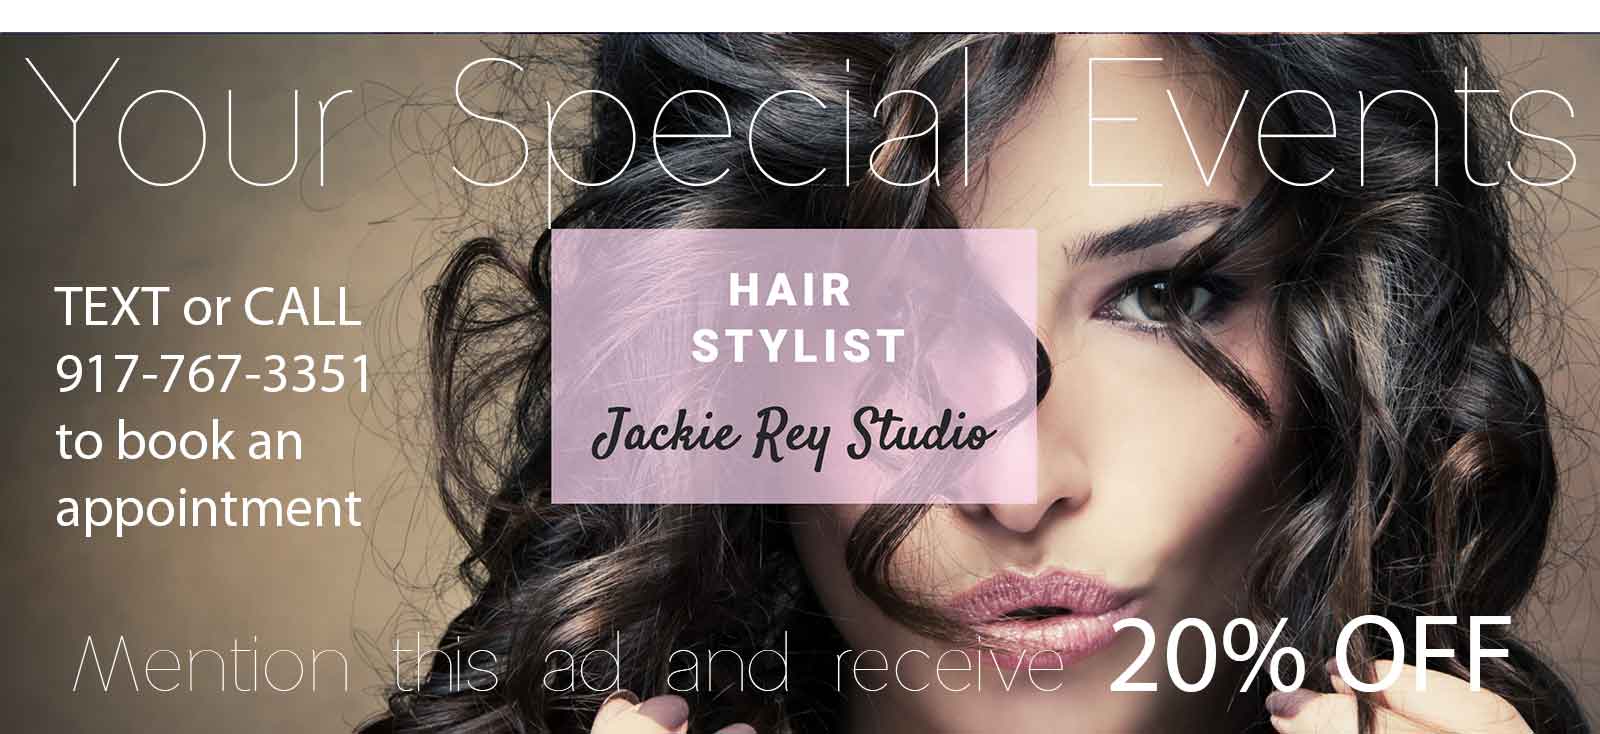 Event Hair Stylist Jackie Rey Hair Studios